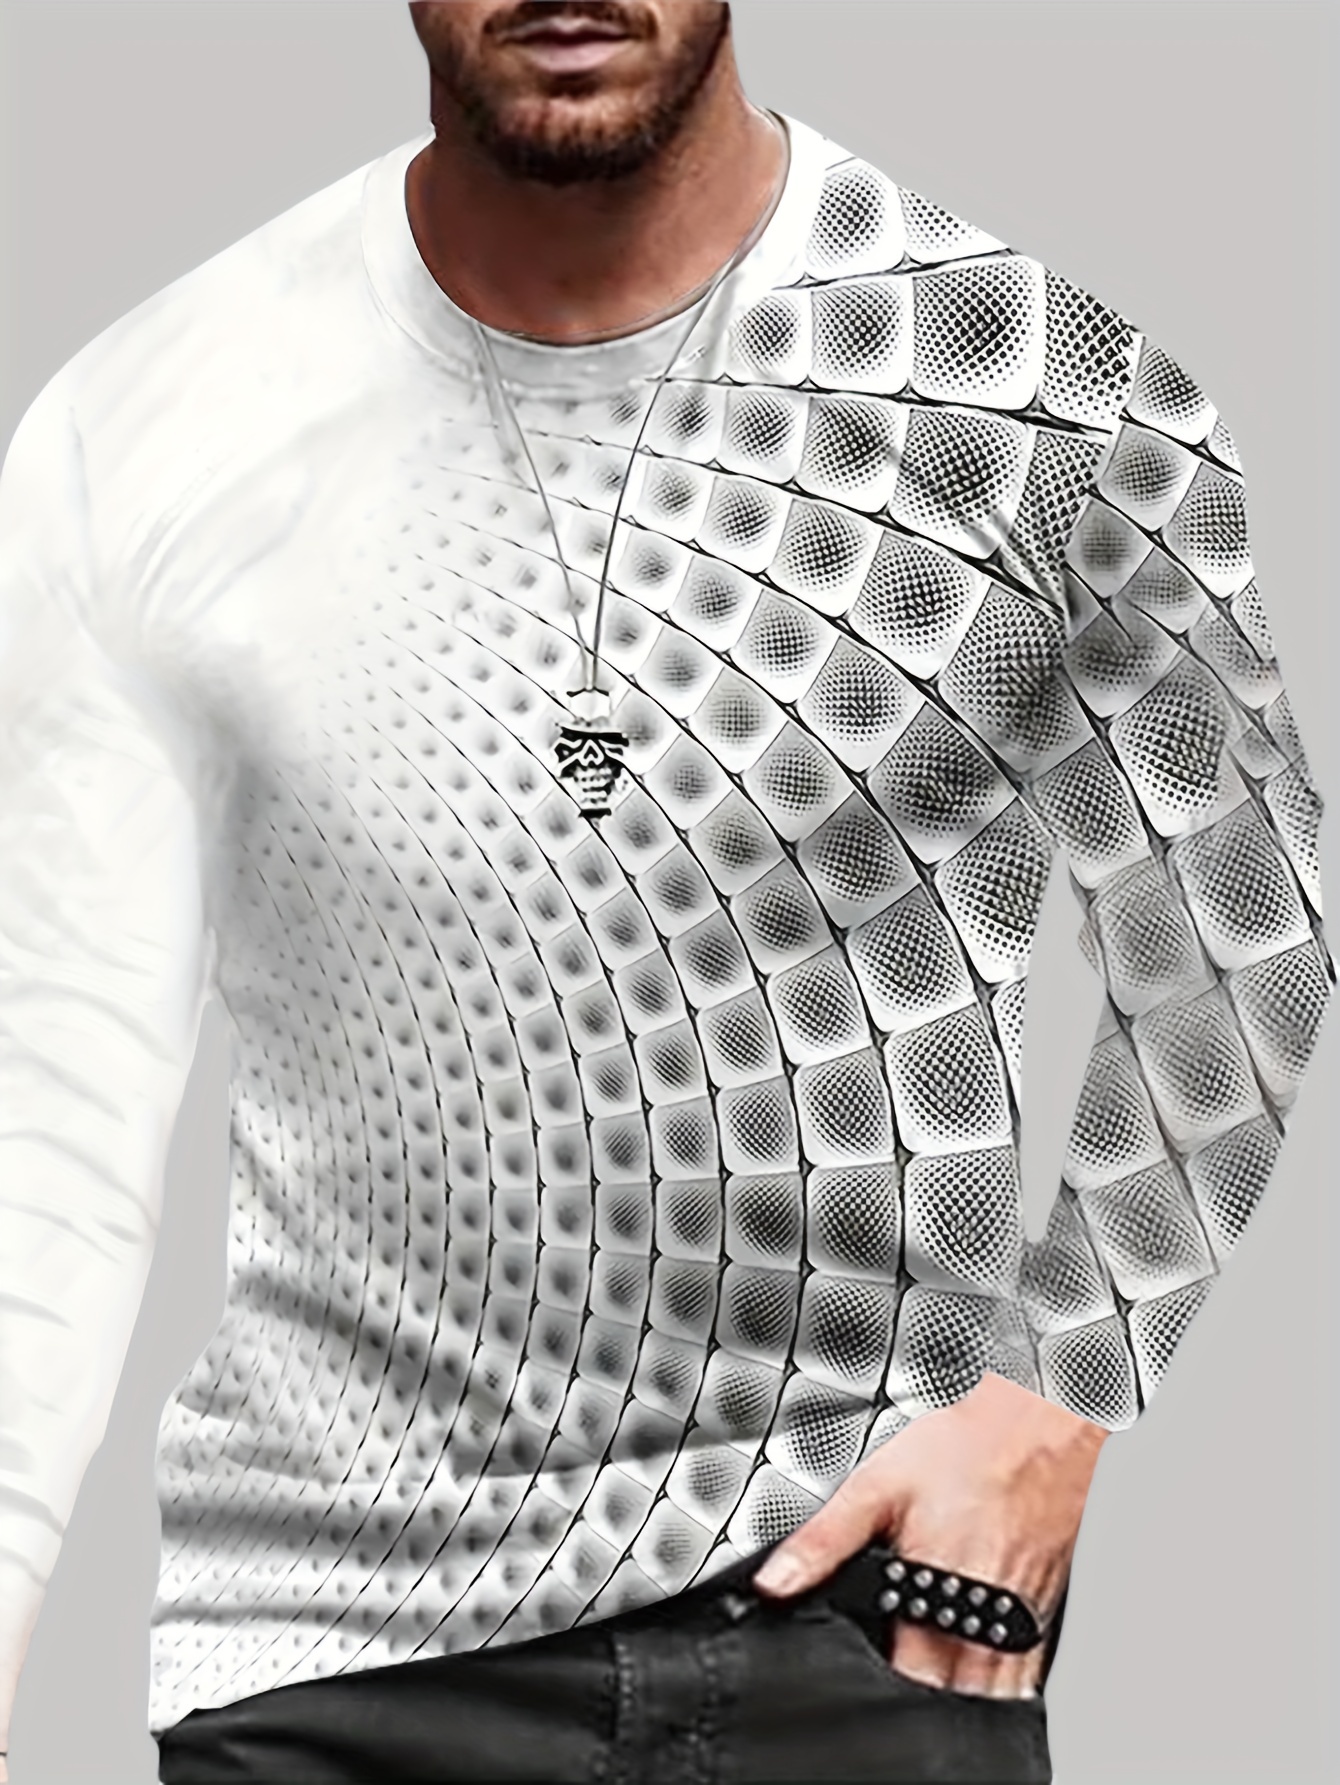 Cosmic Vortex Black Hole 3D Printing Men's Shirt Round Neck T-shirt Street  Hip-hop Cool Style High-quality Brand Clothing S-5XL